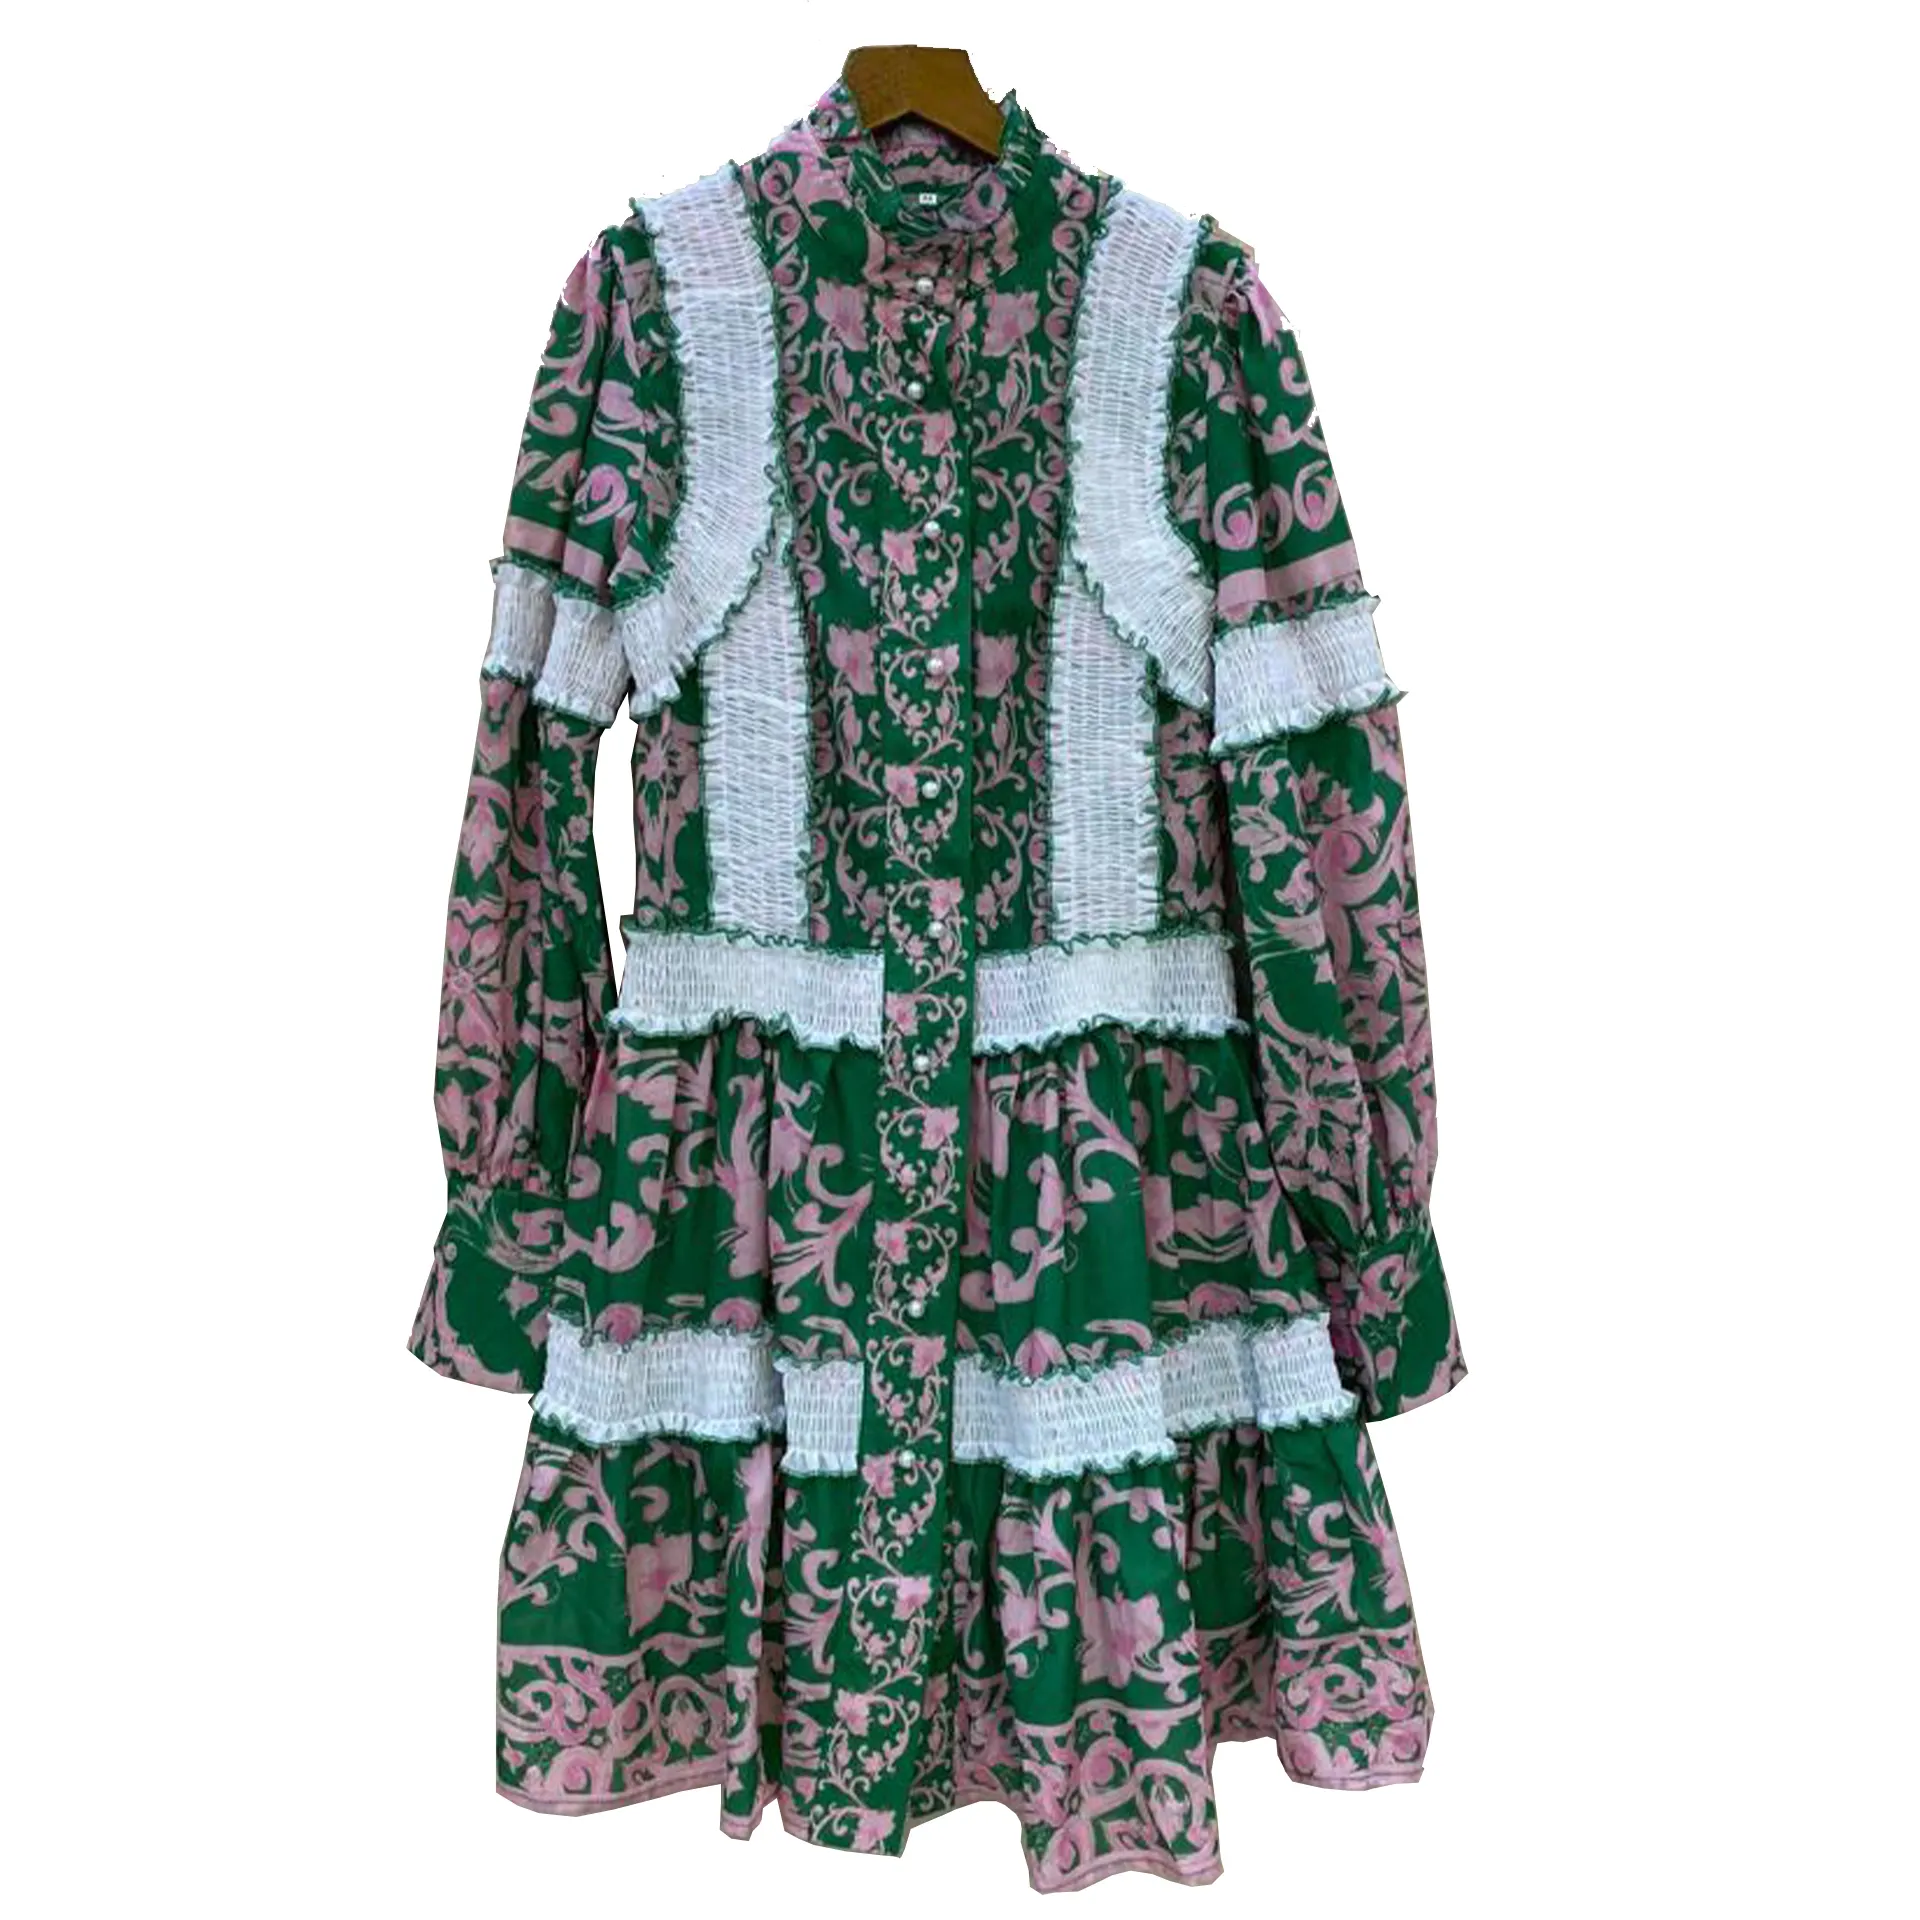 Spring Autumn Ladies'Dress European Vintage Patchwork Sweet Long Dress for Women